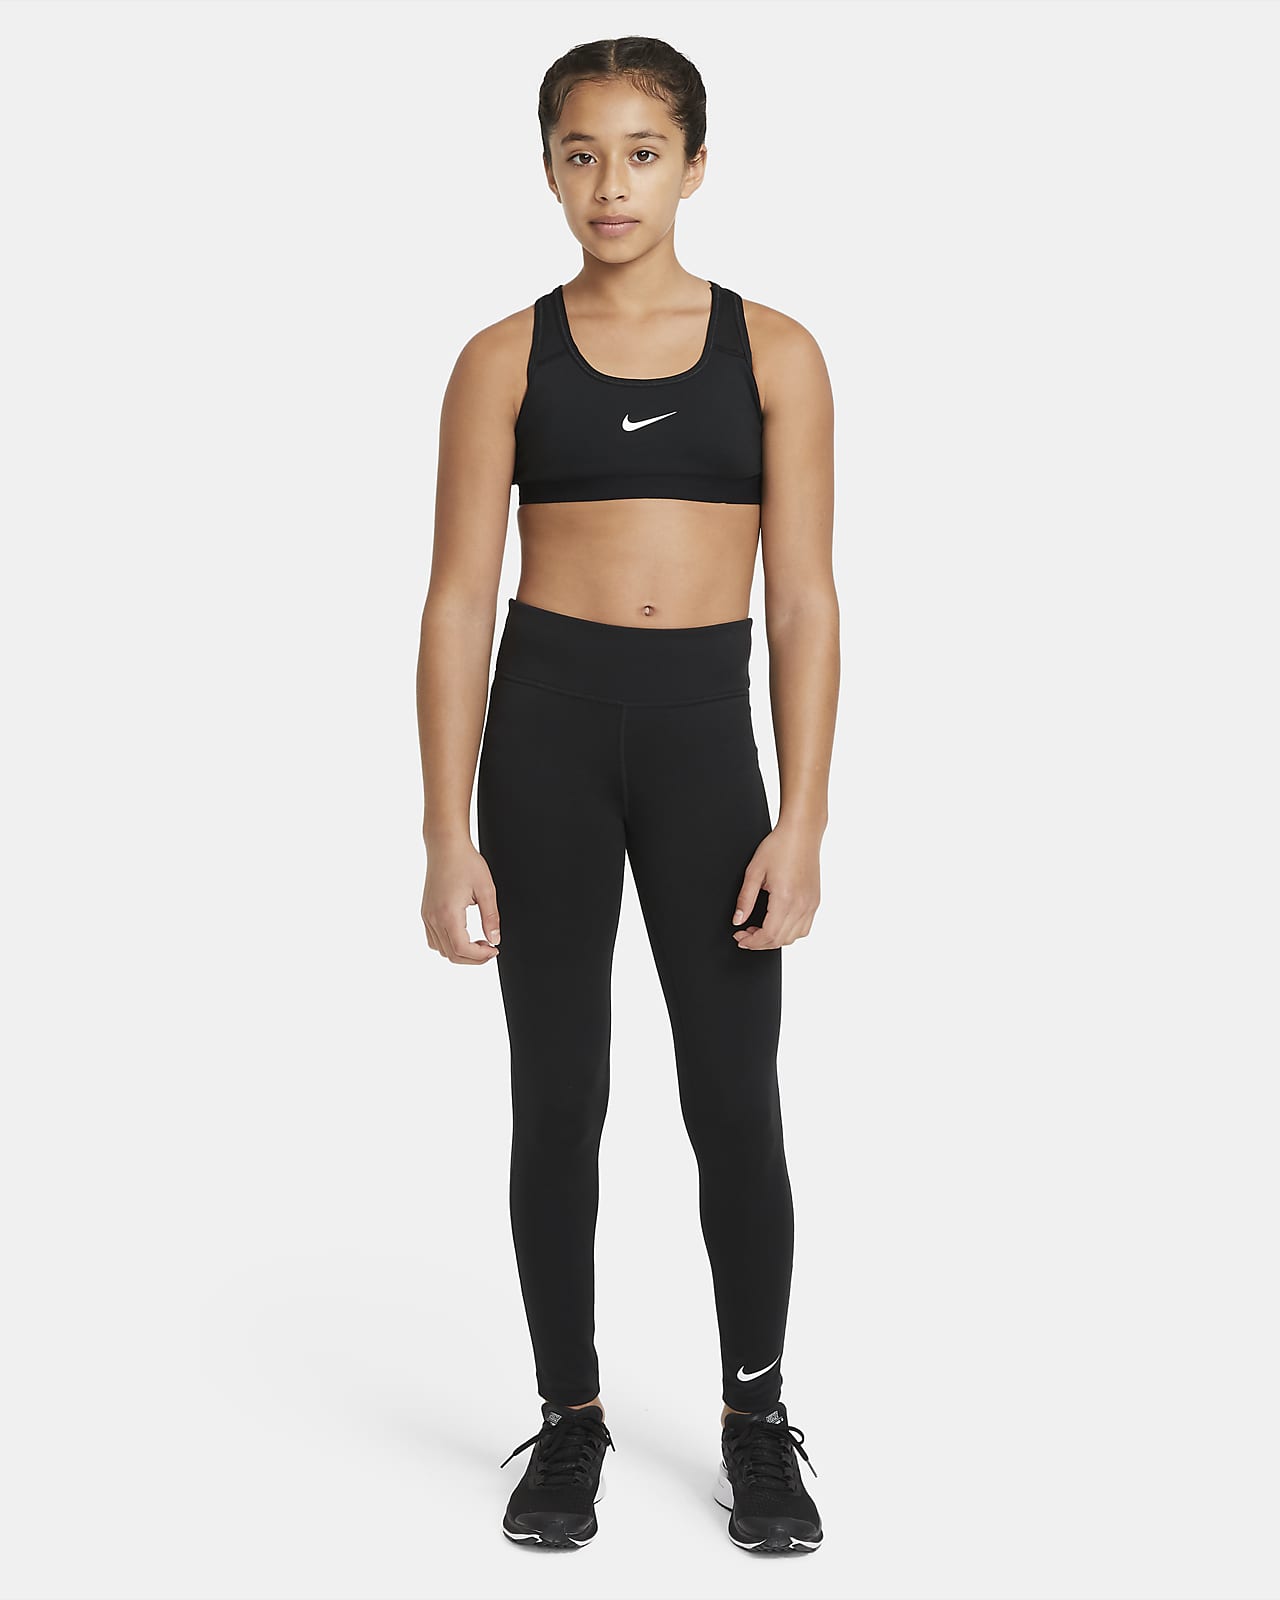 Optimisme Druppelen schrobben Nike Sport-bh voor meisjes. Nike NL